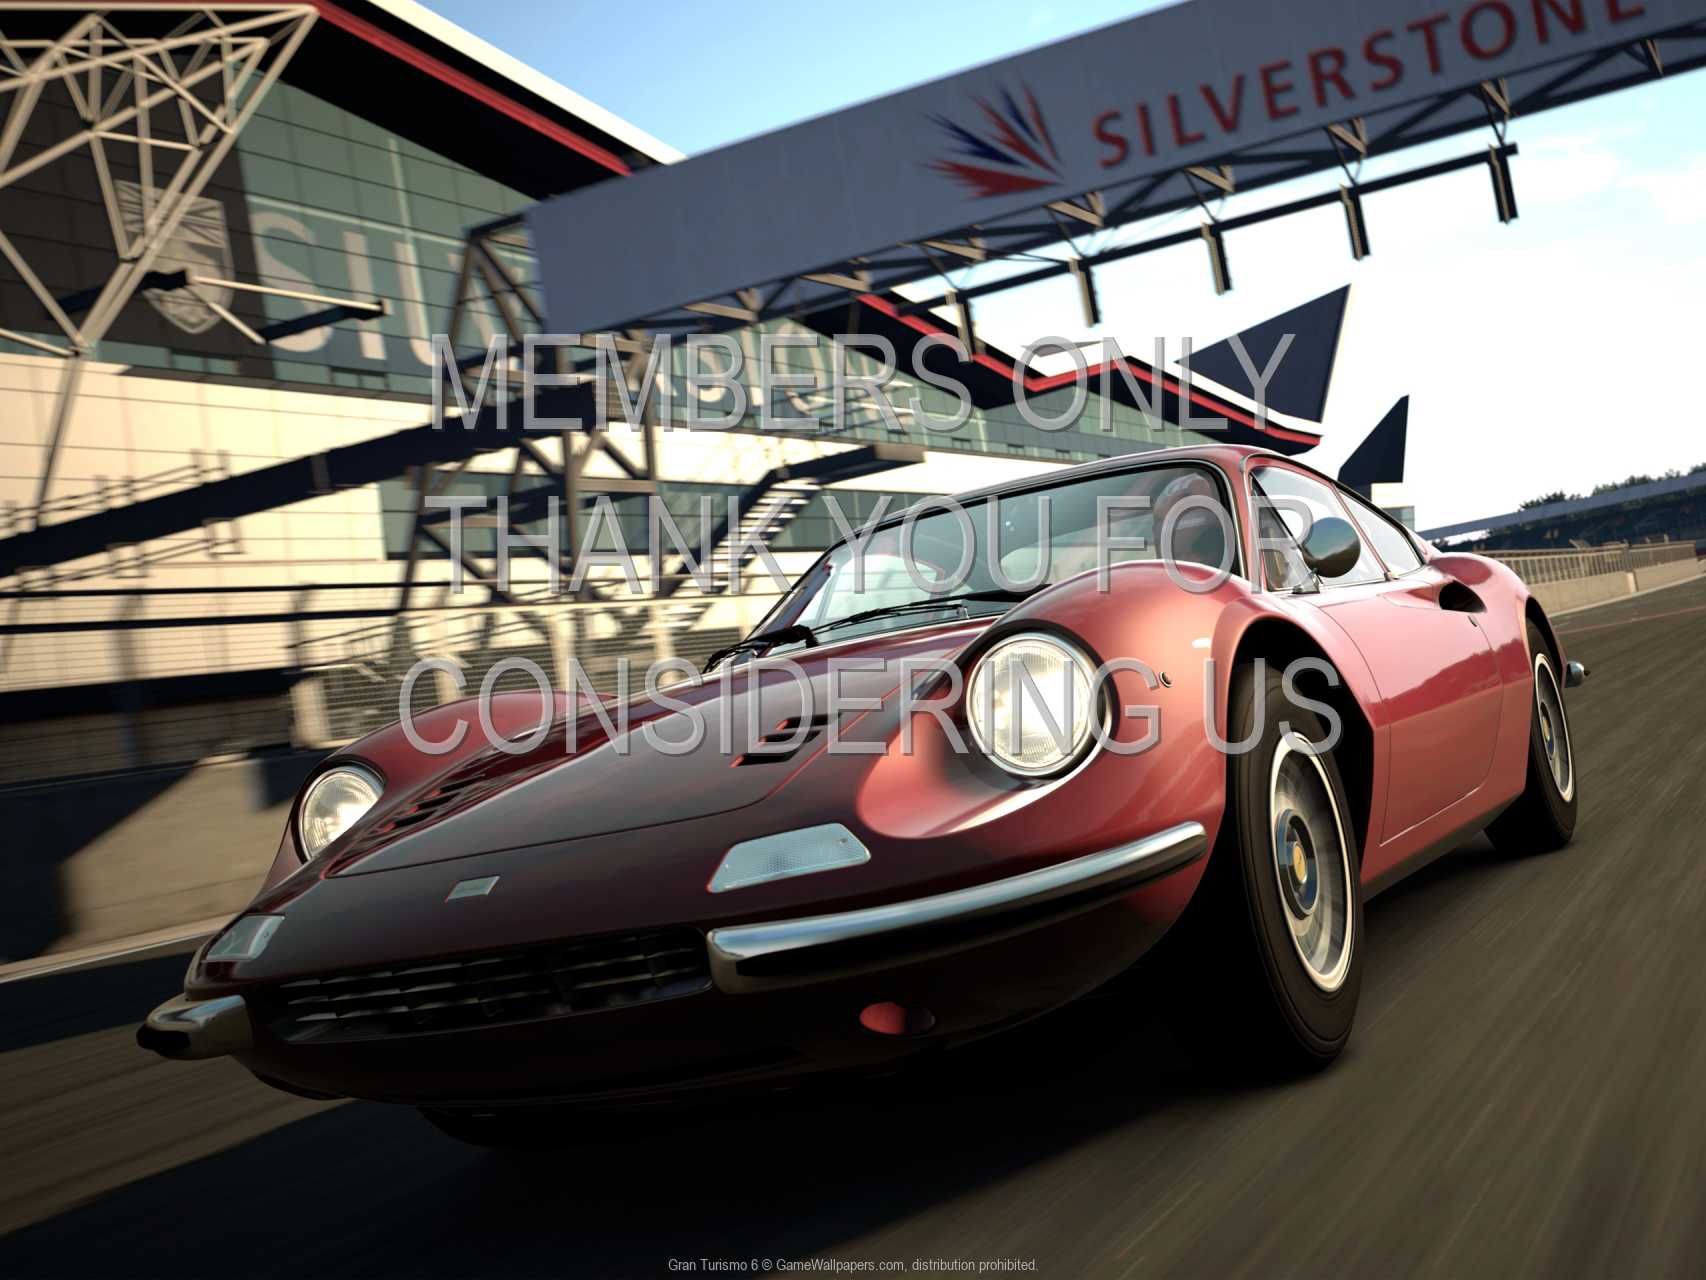 Gran Turismo 6 720p%20Horizontal Mobile wallpaper or background 02